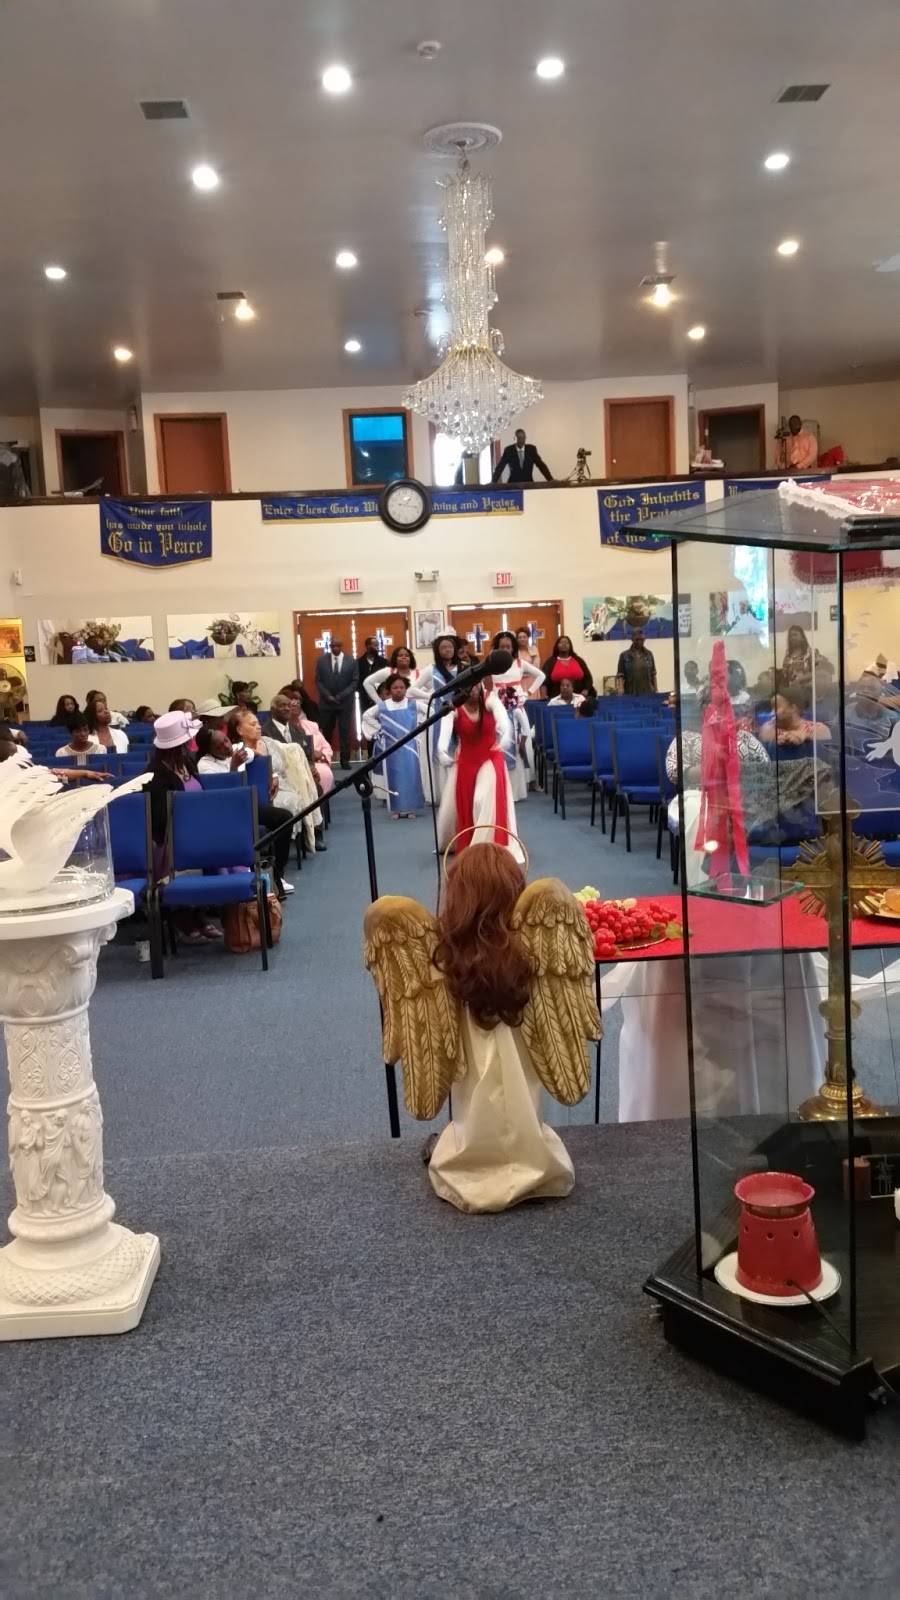 Mt Sinai Gospel Church | Photo 2 of 2 | Address: 27 Prescott St, Jersey City, NJ 07304, USA | Phone: (201) 434-6025